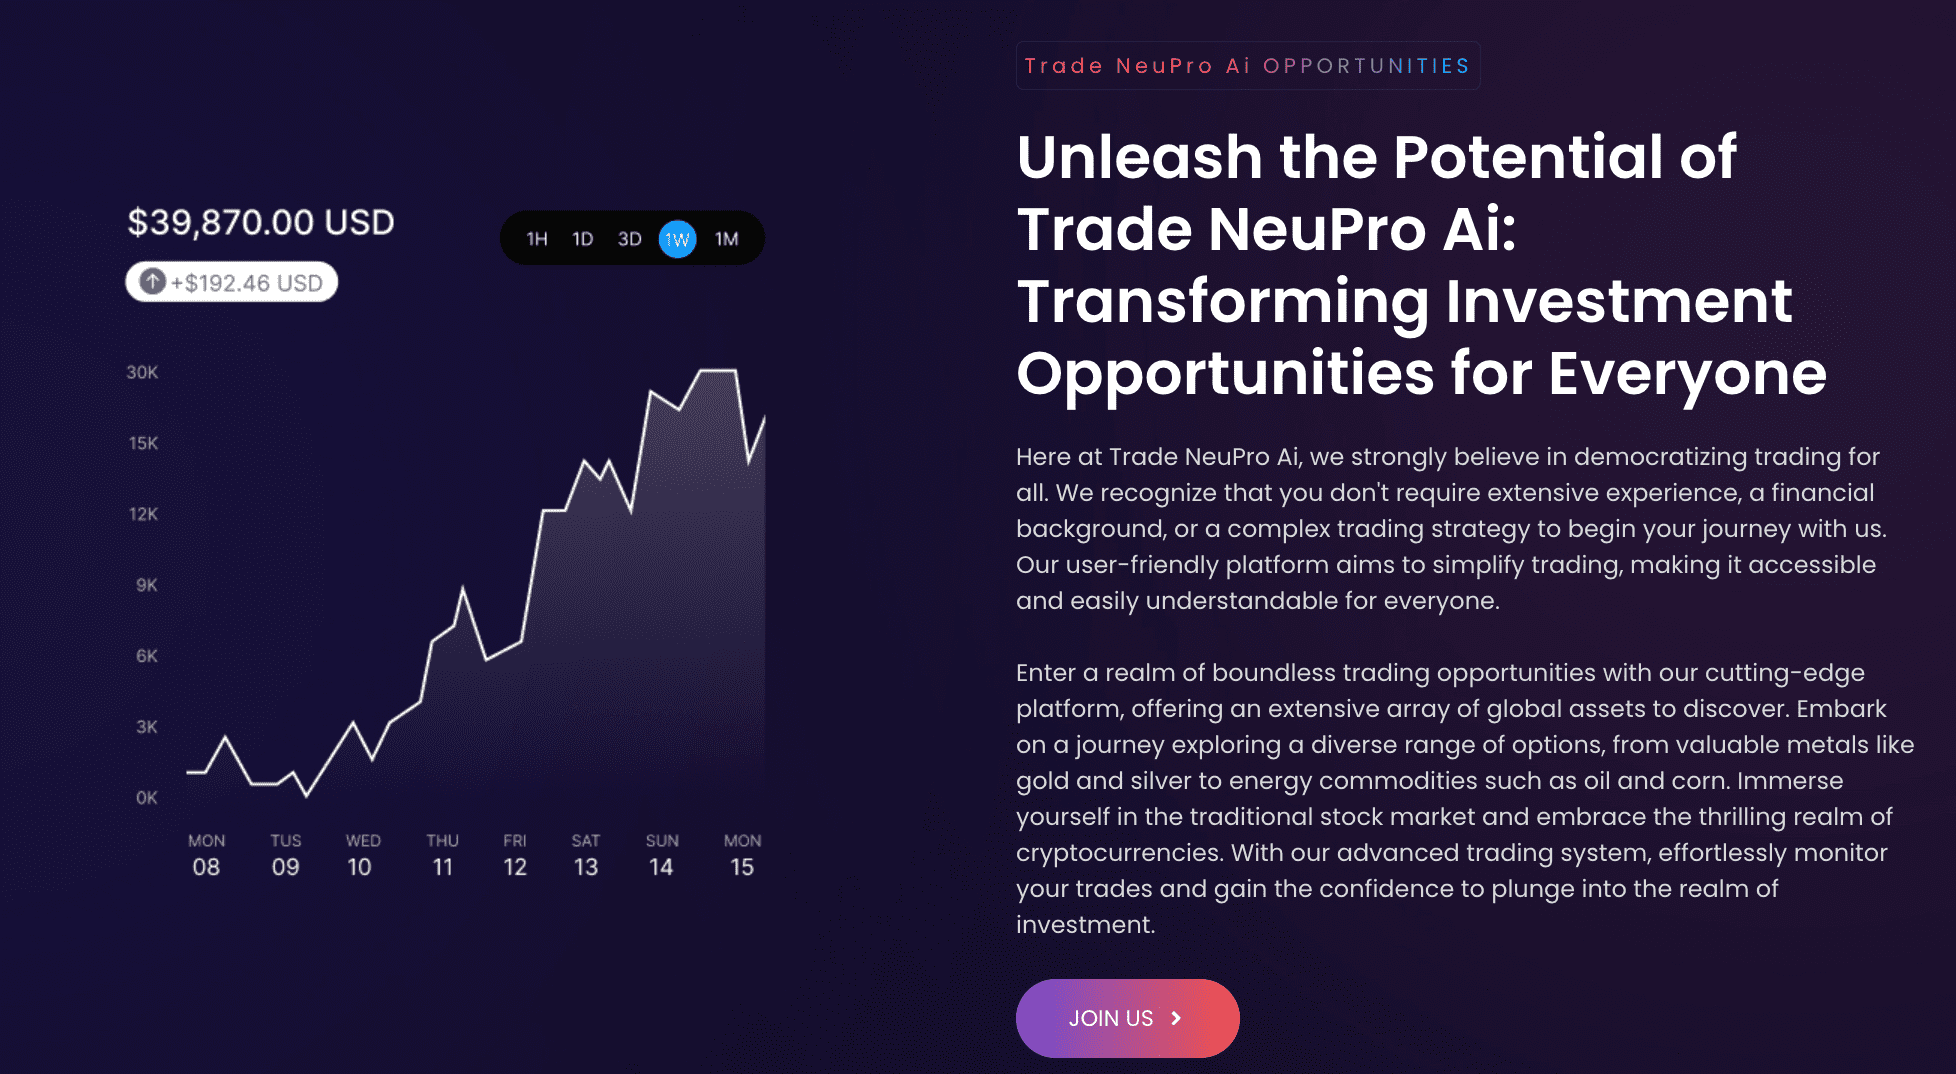 Oportunidades Trade 1.1 NeuPro (i1)